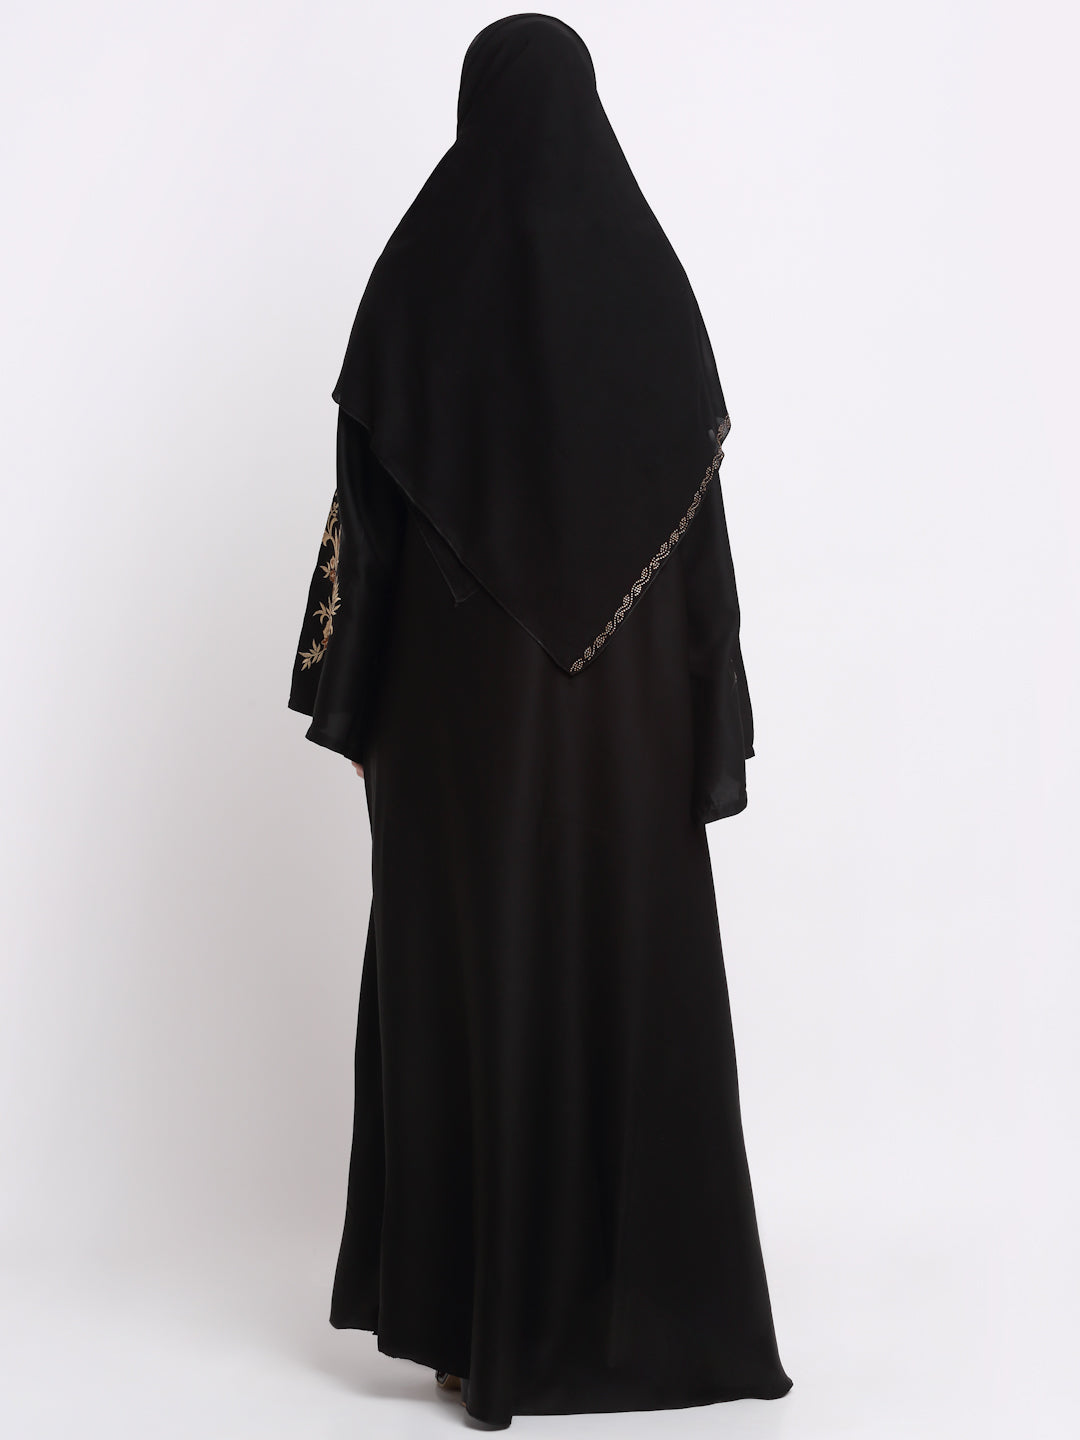 Klotthe Women Black Solid Burqa With Scarf